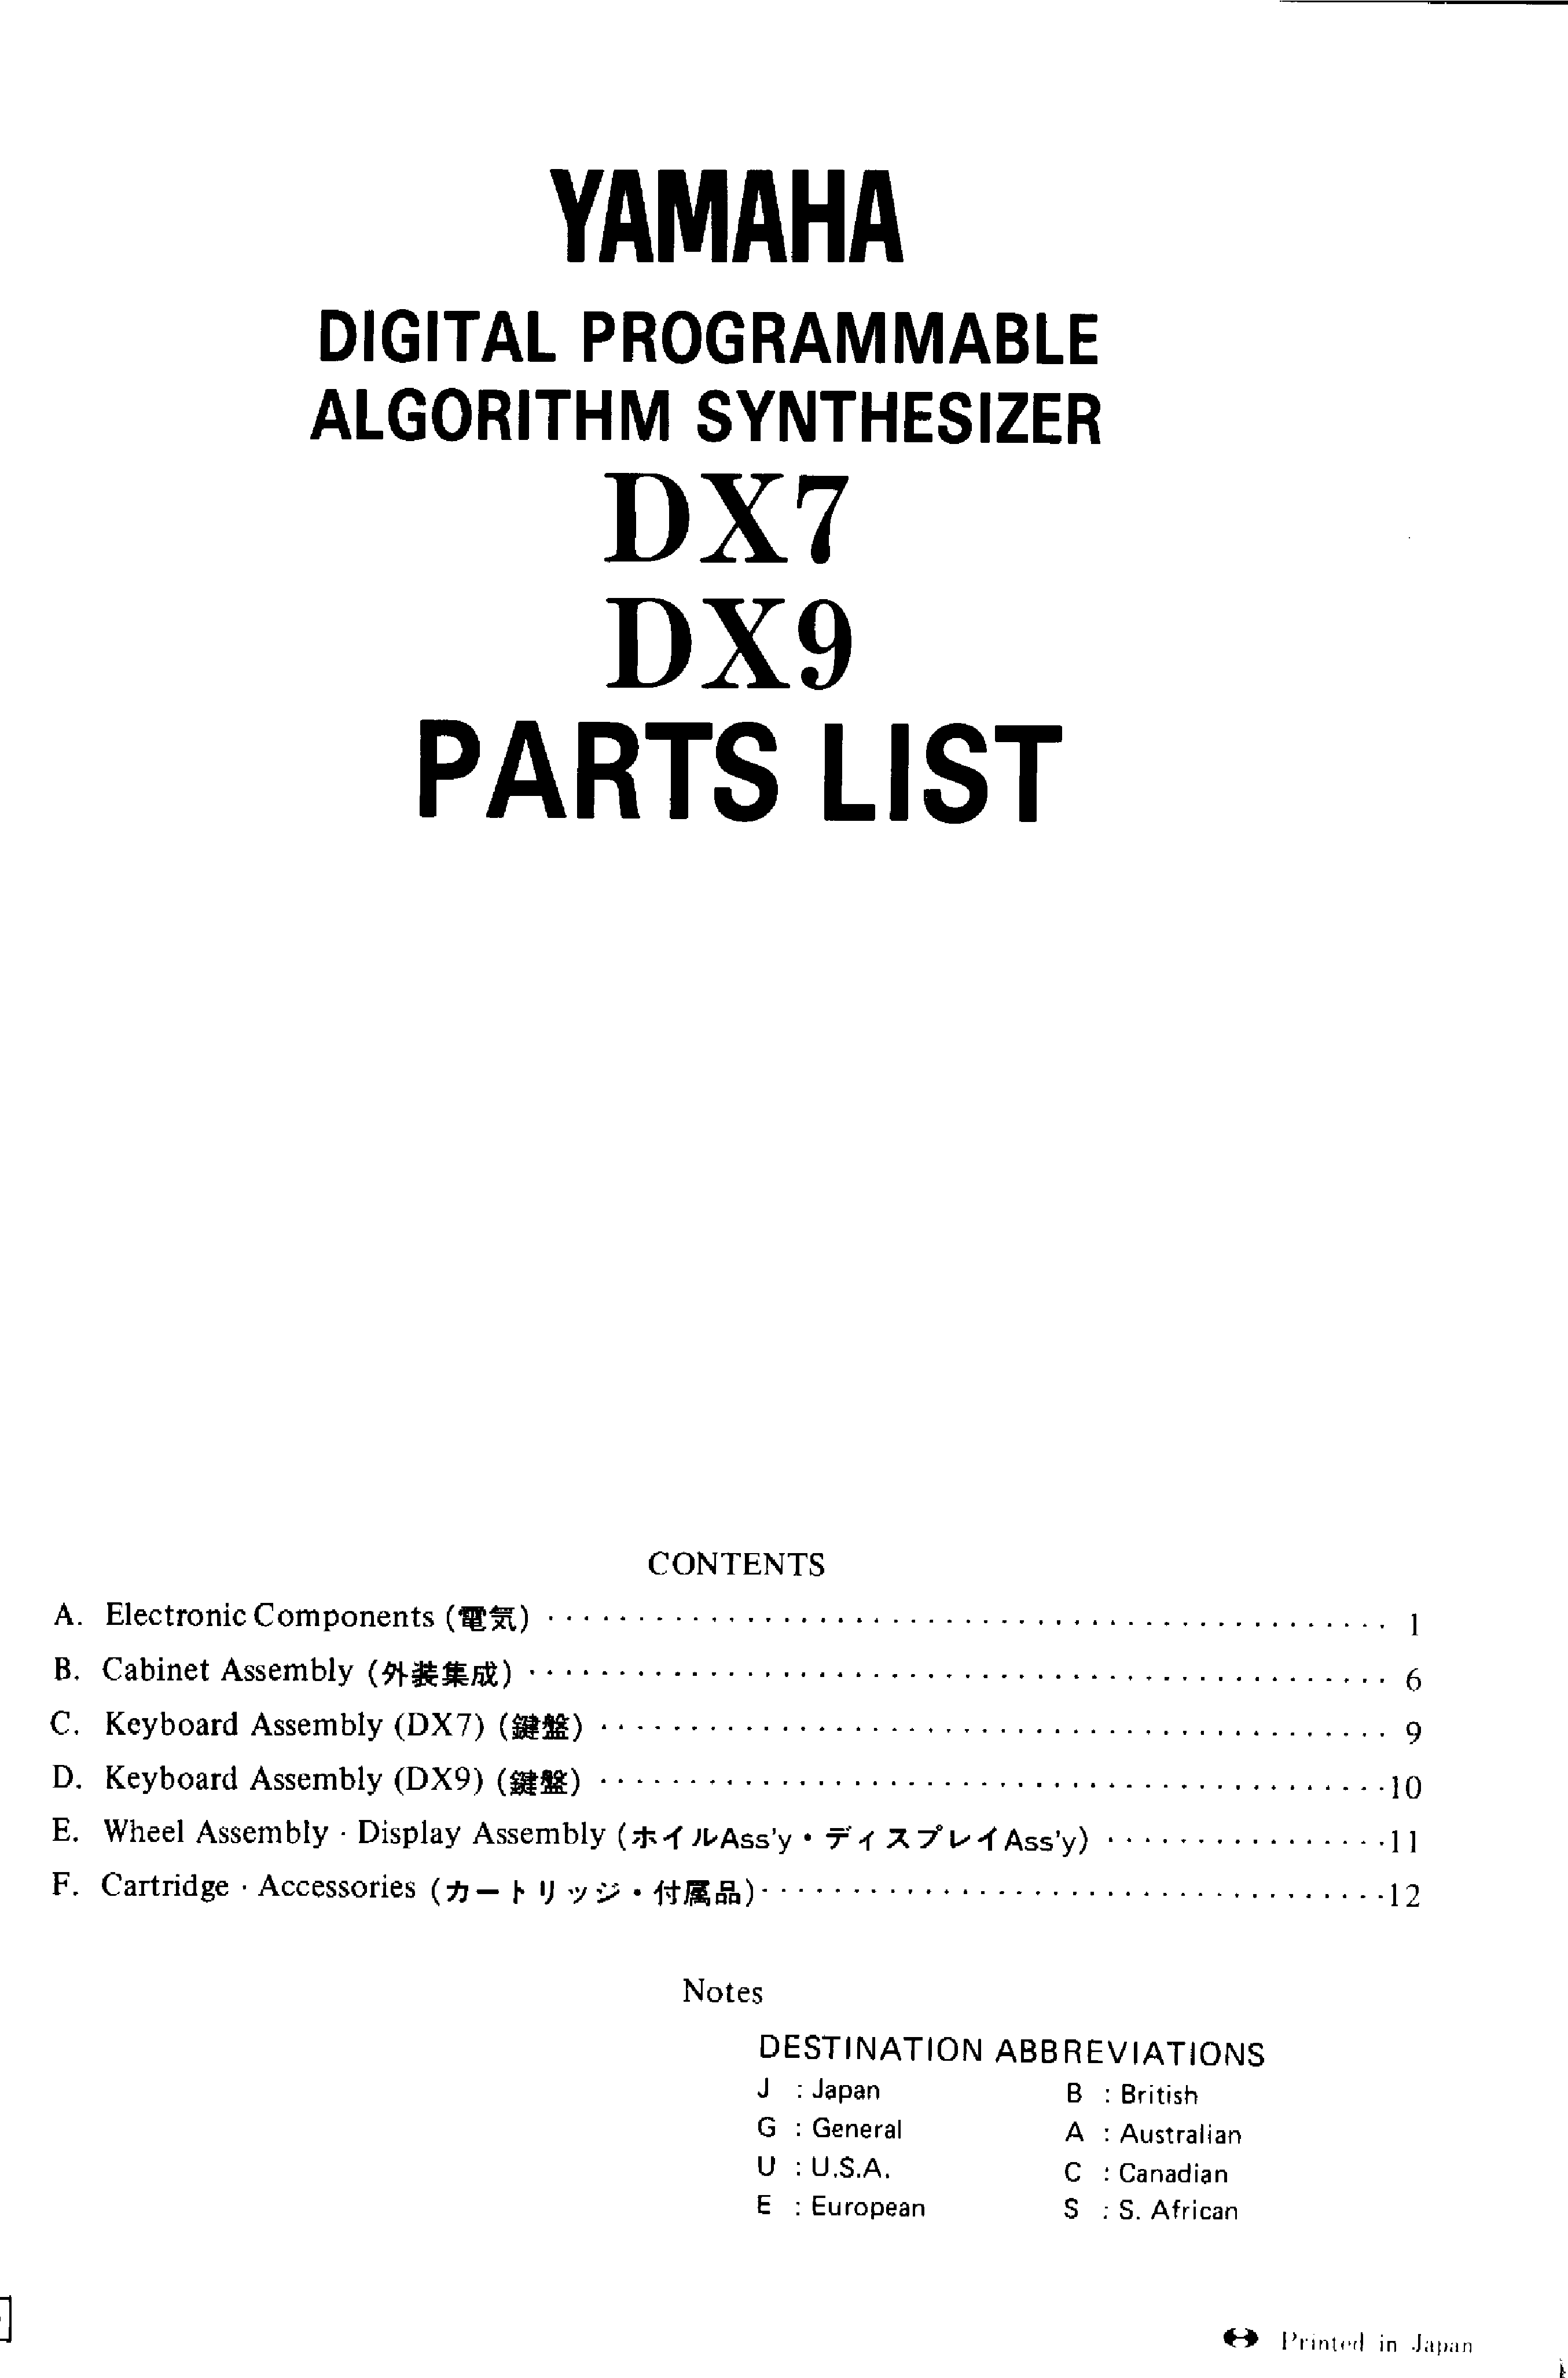 YAMAHA DX7 DX9 PARTS LIST service manual (1st page)